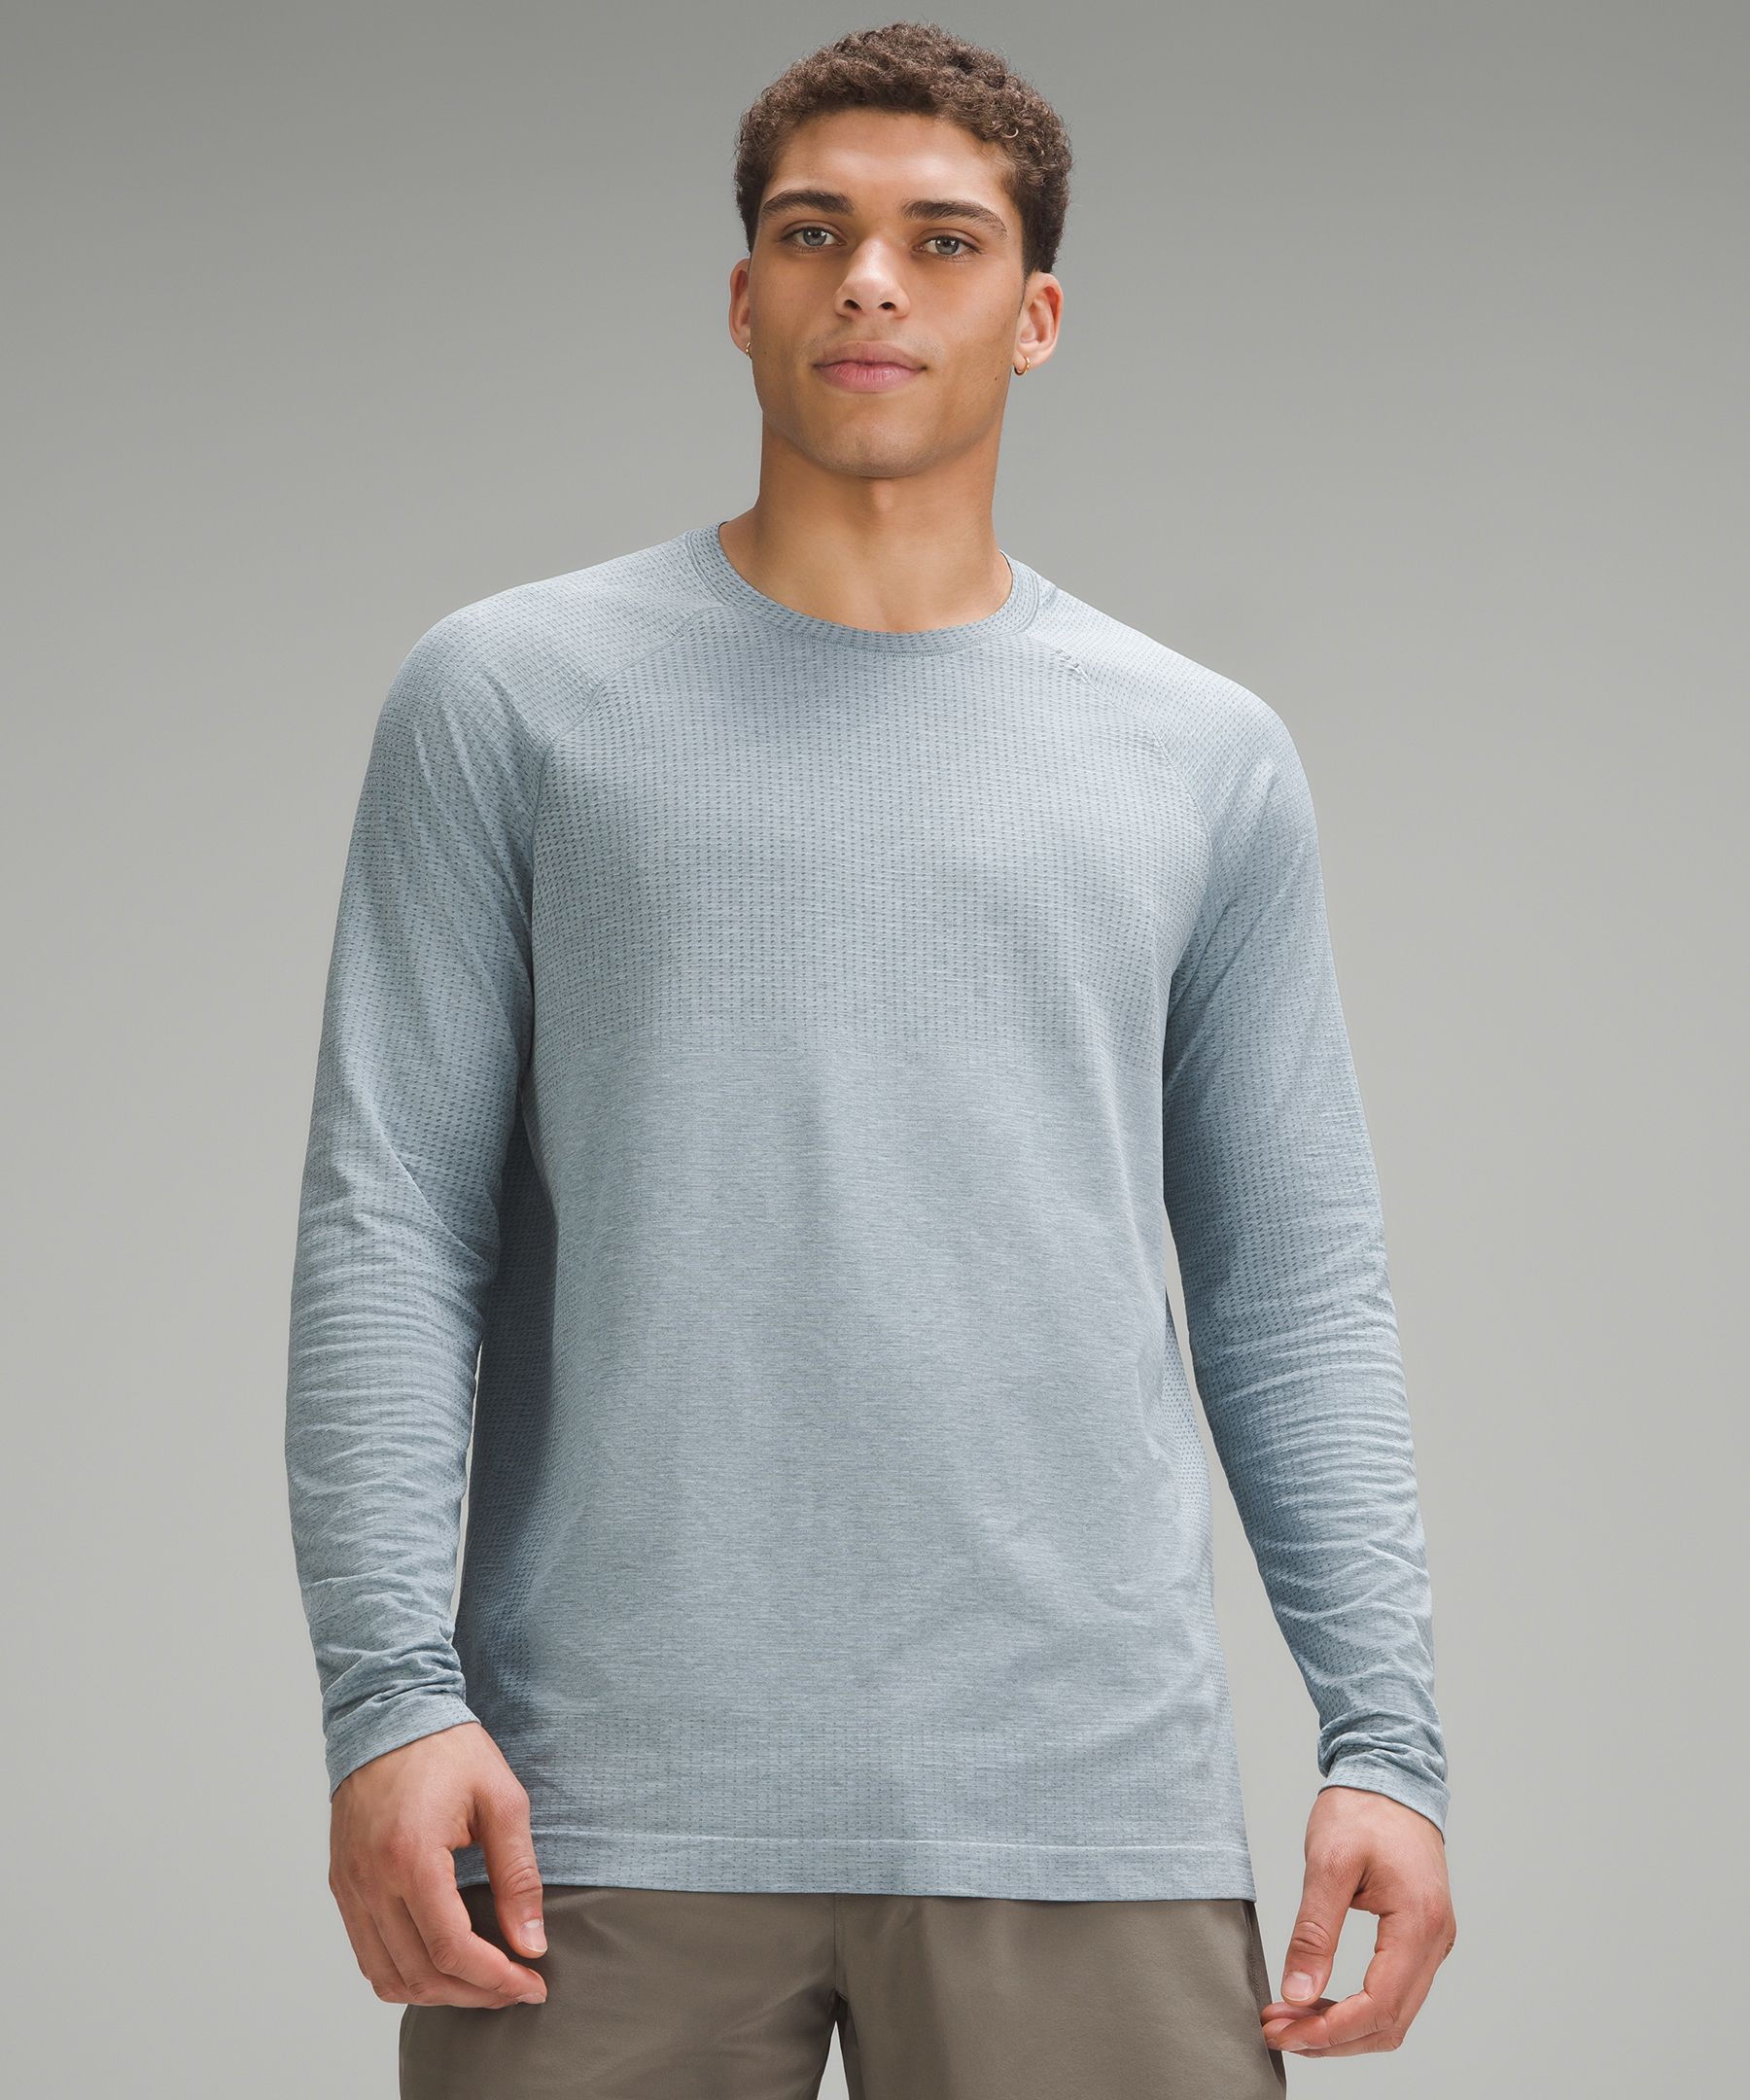 Metal Vent Tech Long-Sleeve Shirt, Men's Long Sleeve Shirts